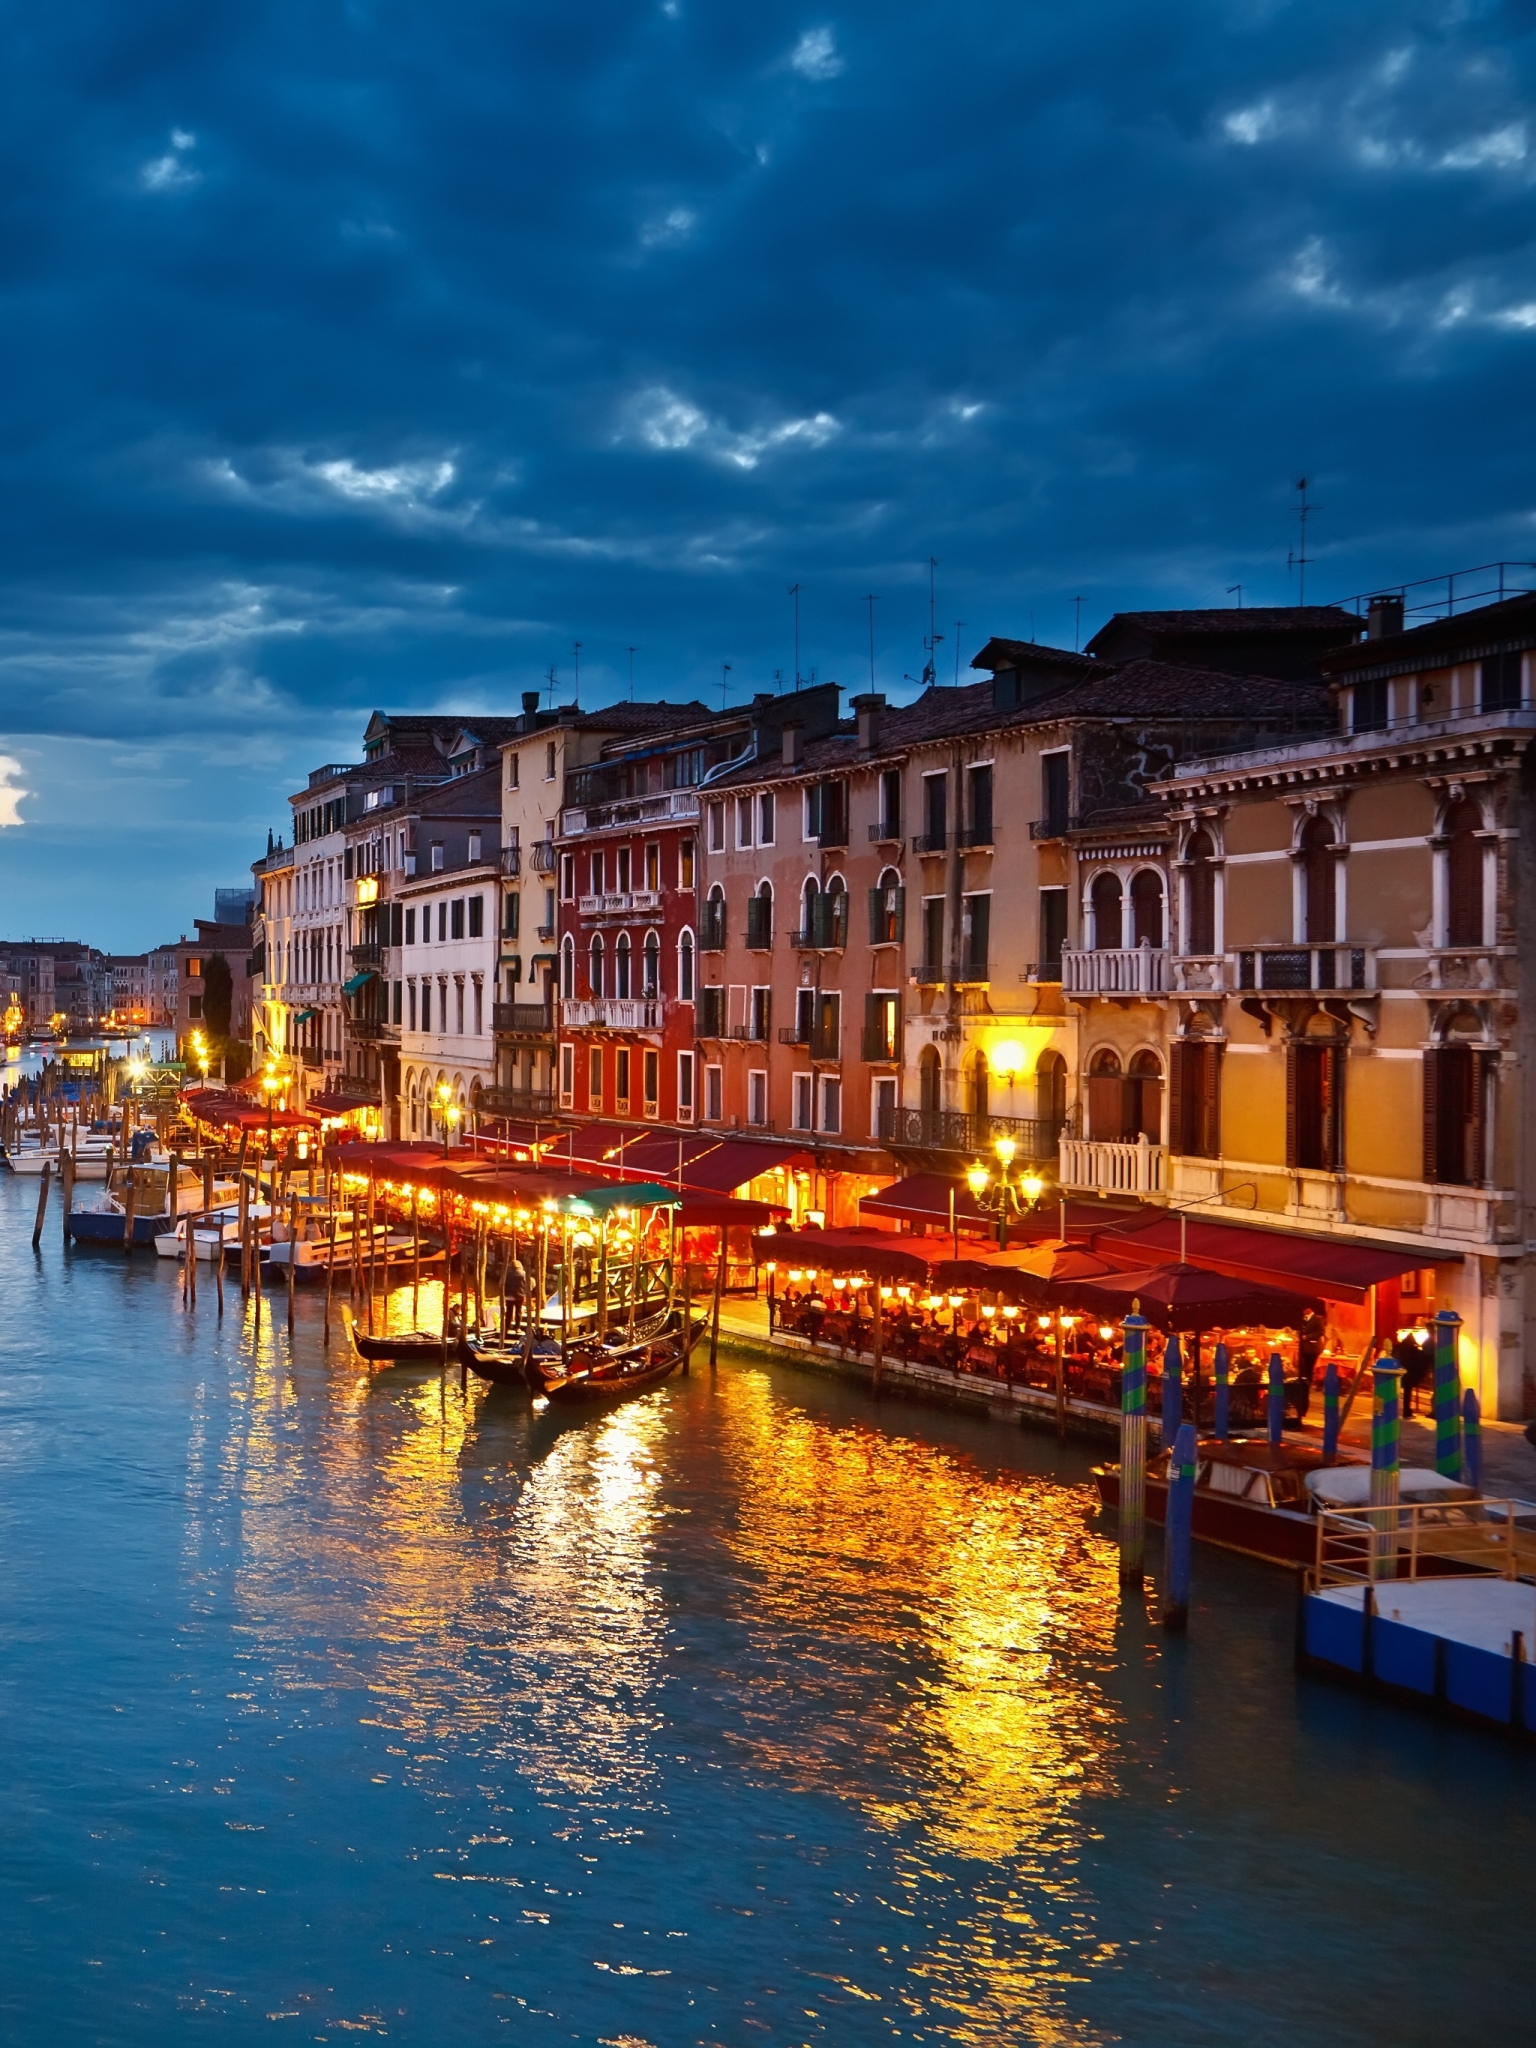 Venice Italy for Apple iPad Air 2 resolution